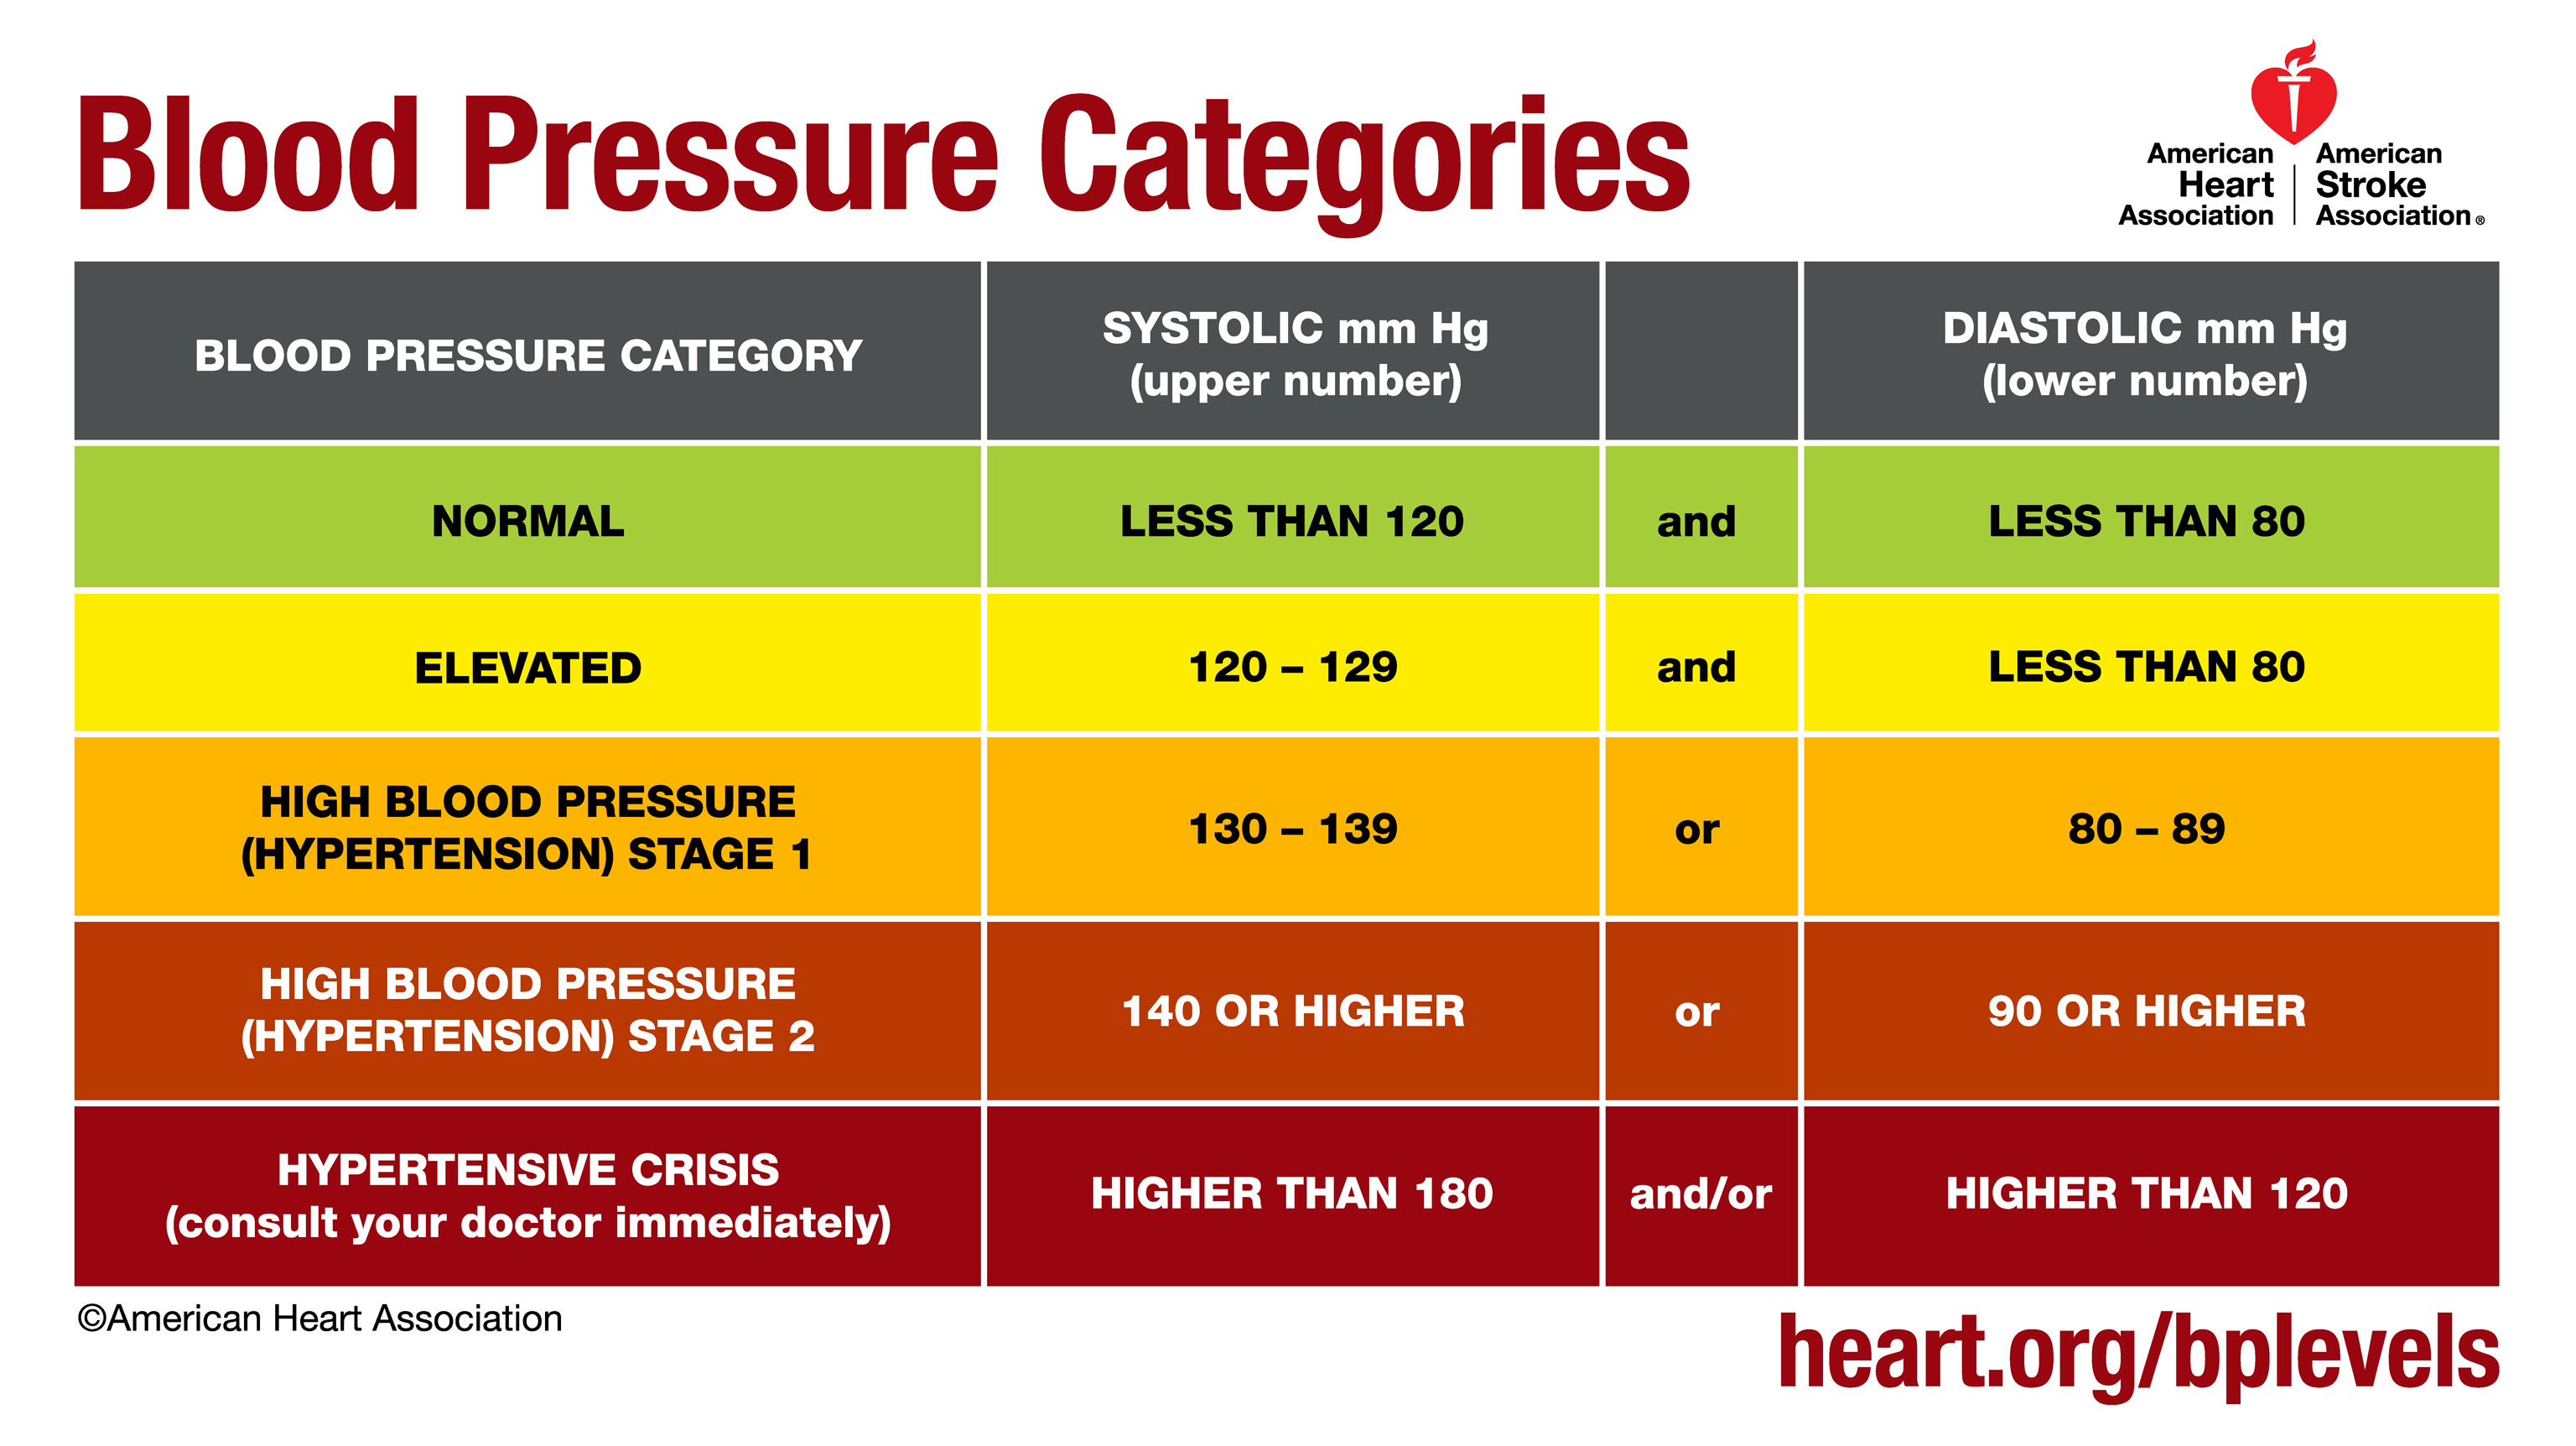 VII.11. High blood pressure